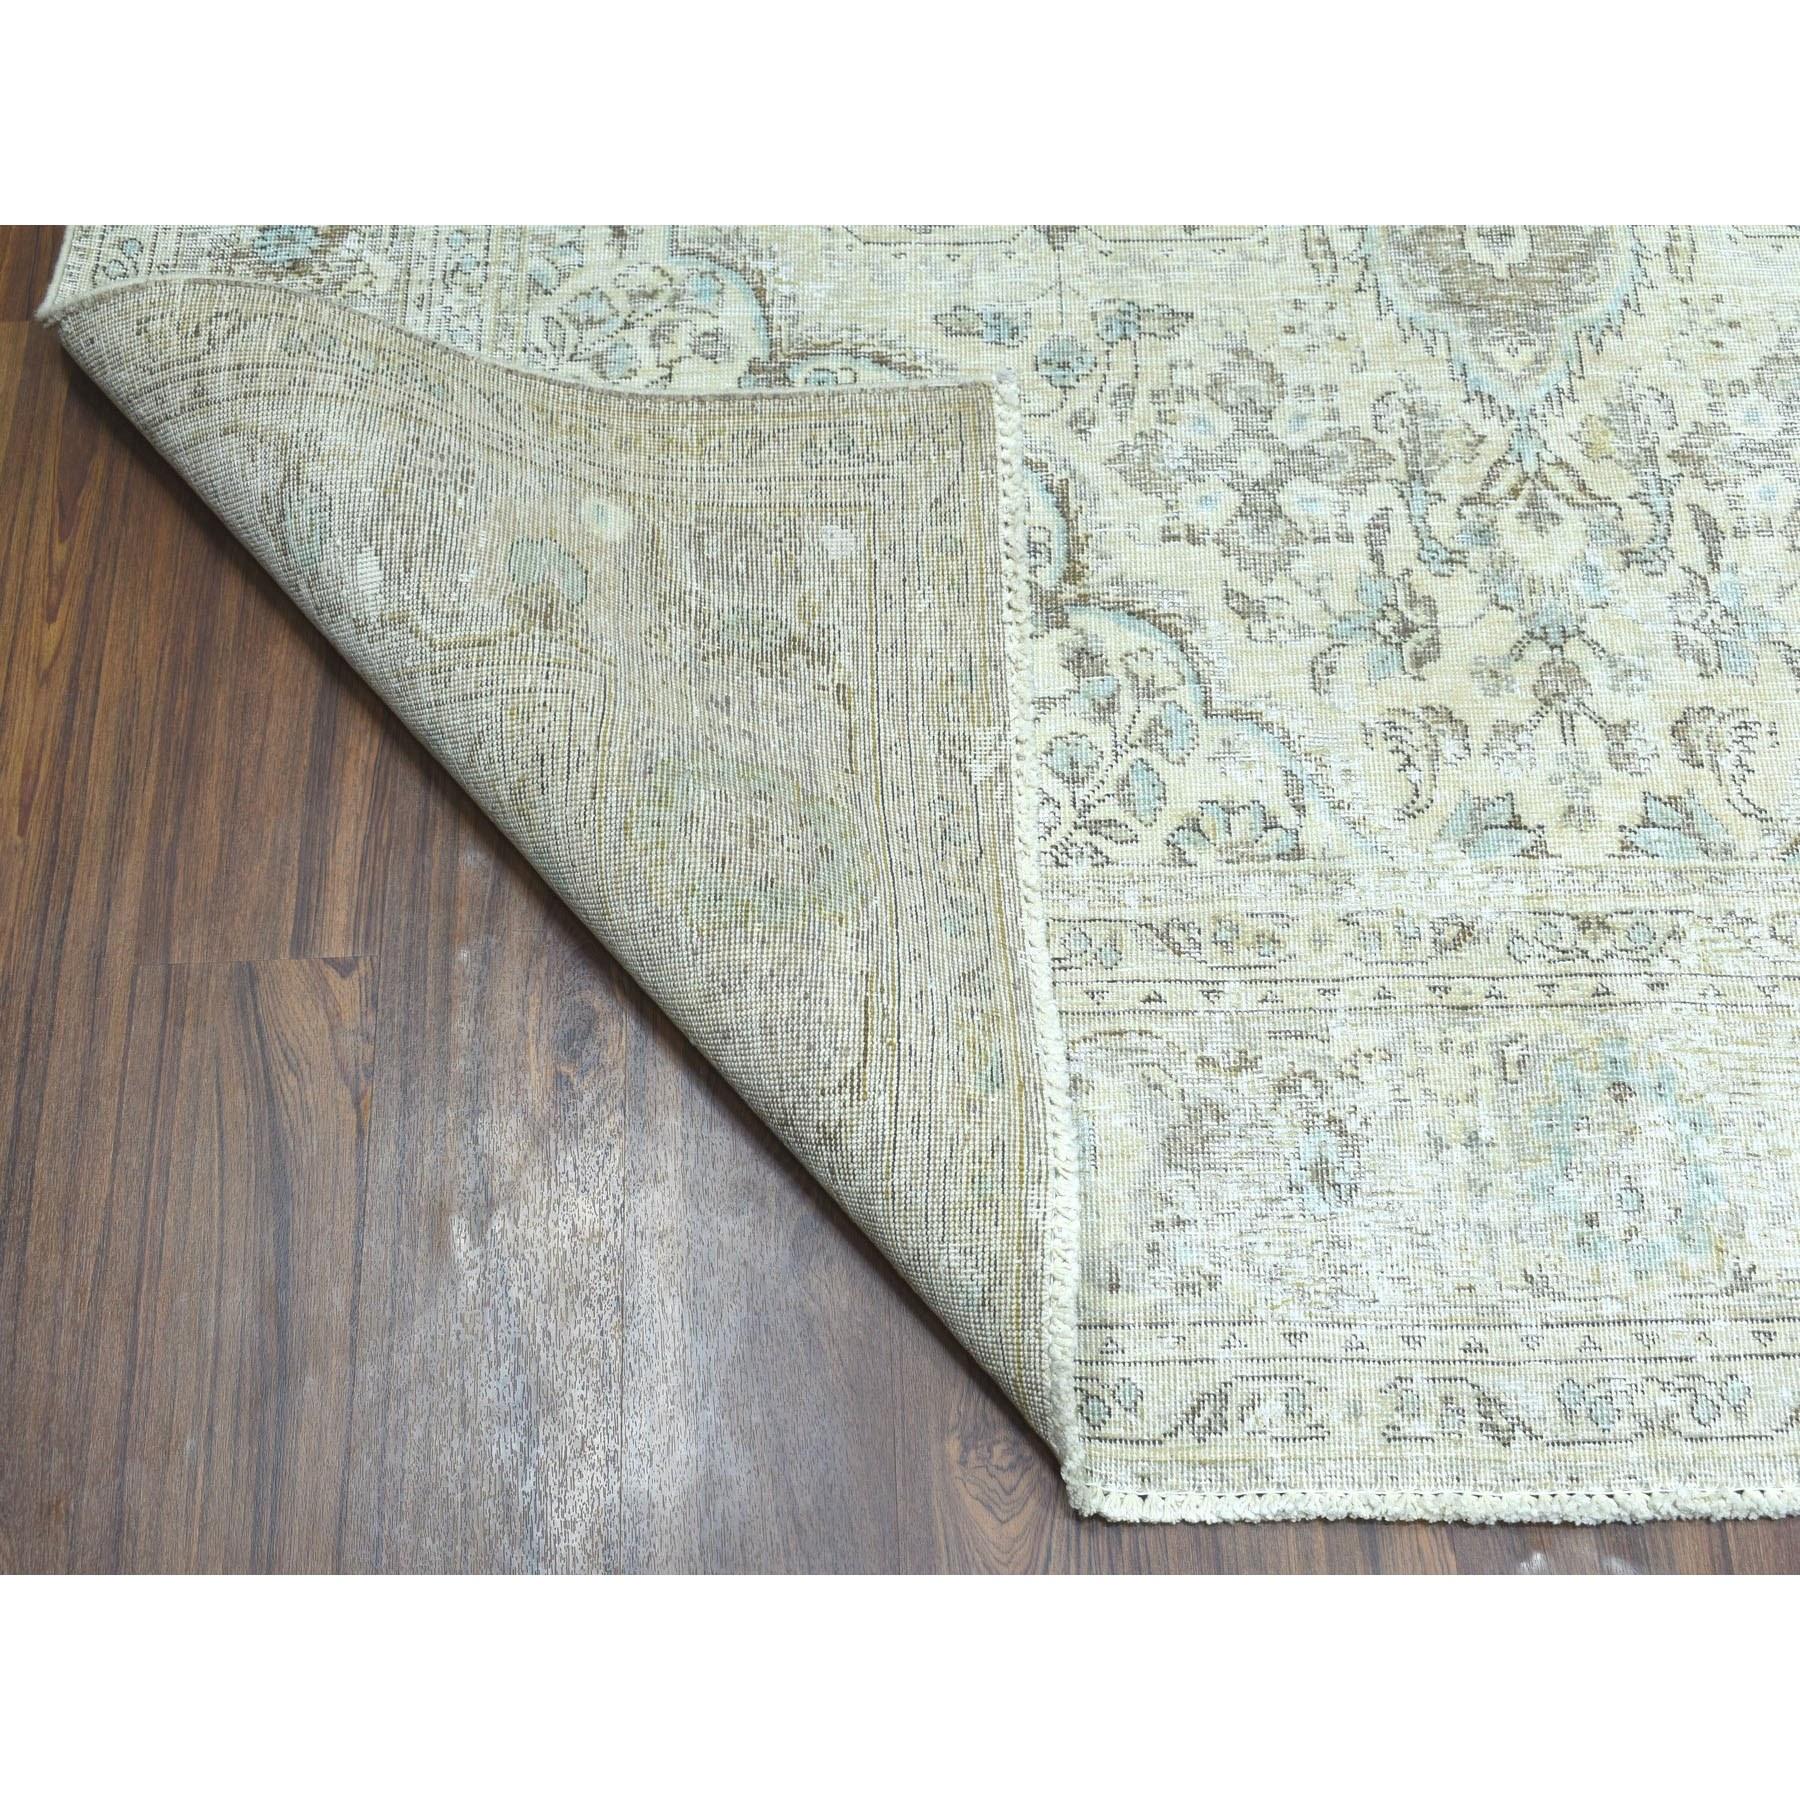 oriental designer rugs atlanta ga